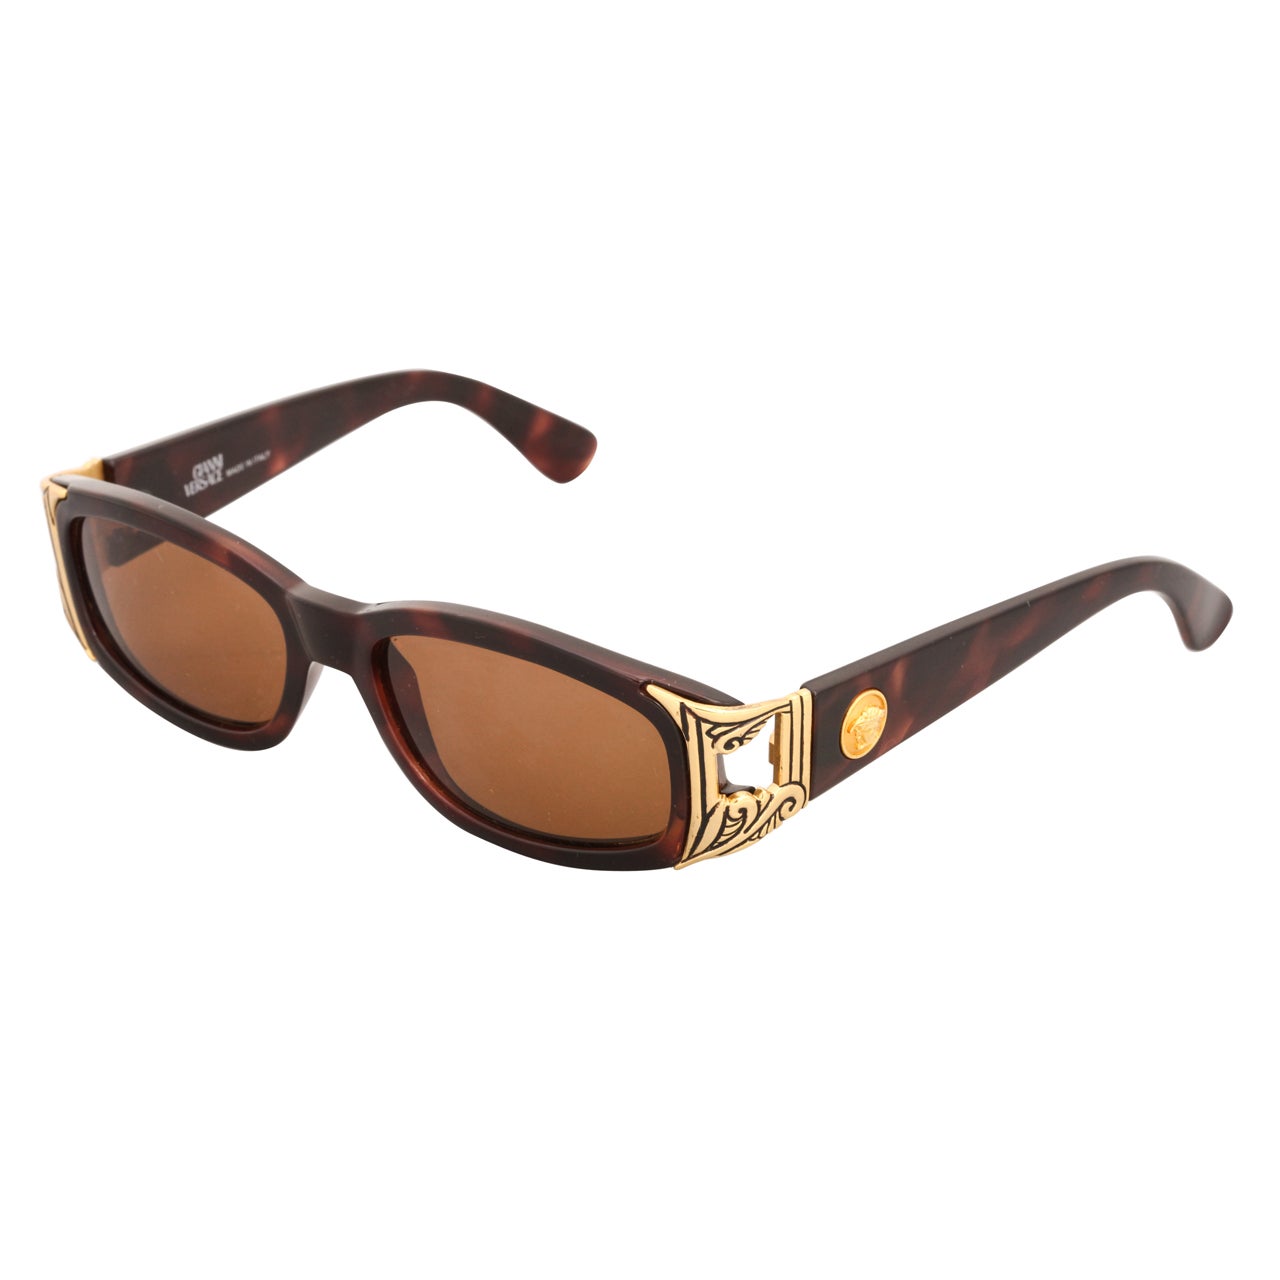 Gianni Versace Sunglasses Mod 482 COL 900